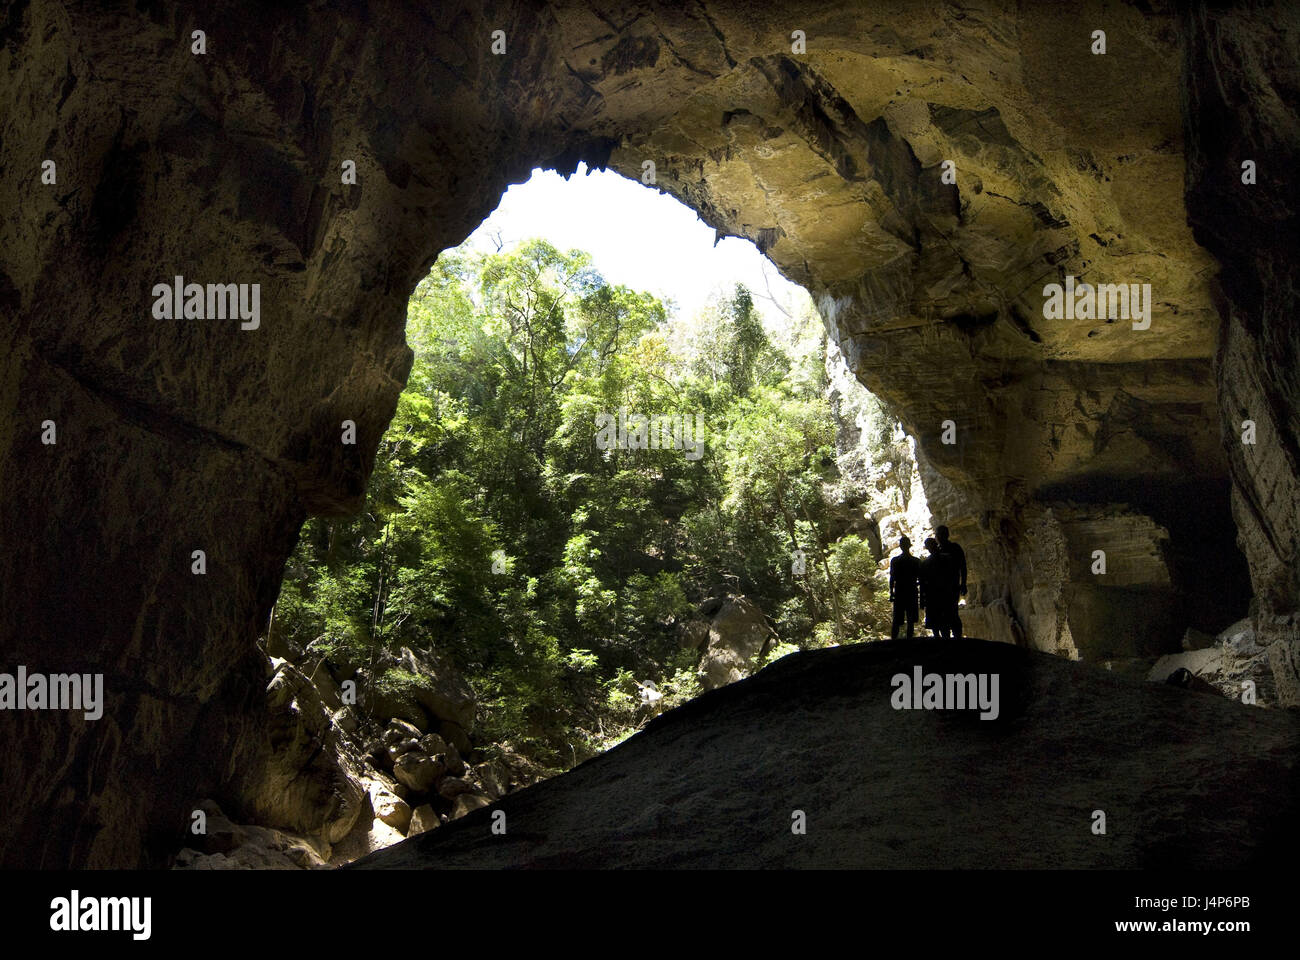 Madagaskar, Ankarana National Park, Felsen, Grube, Eingang, Kontur, Menschen, drei, Stockfoto